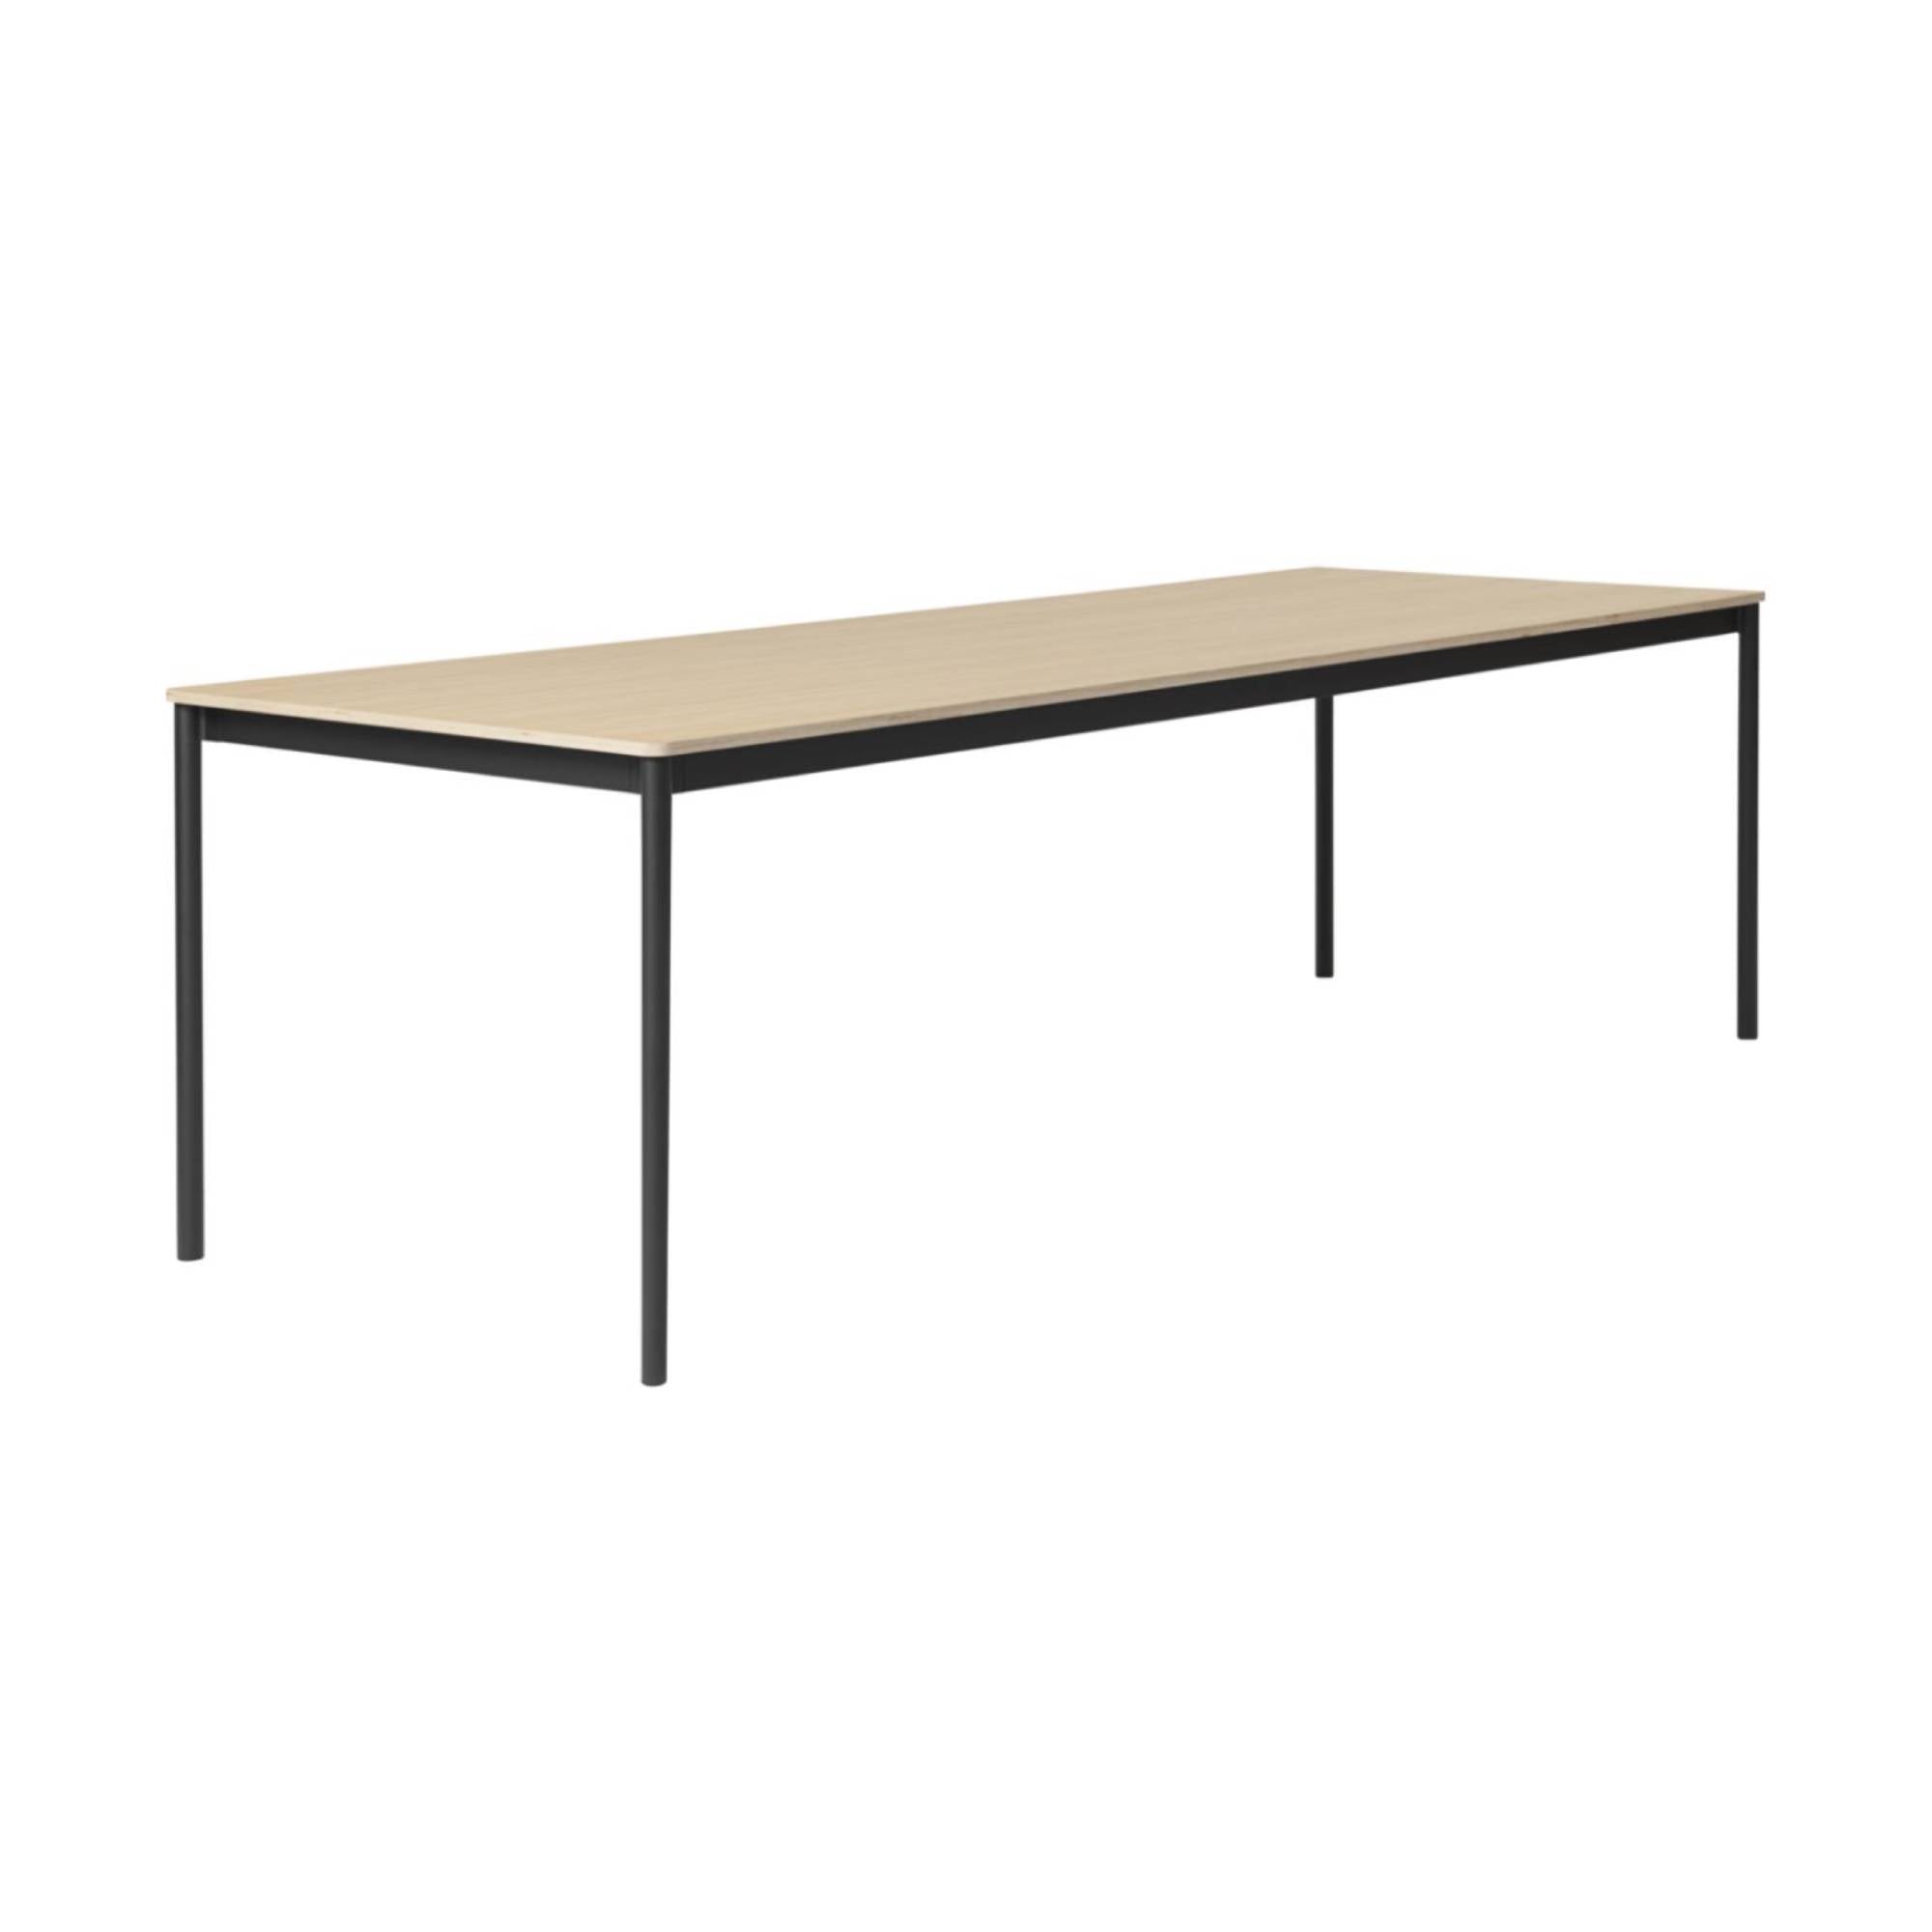 Base Table: Large + Oak Veneer + Plywood Edge + Black